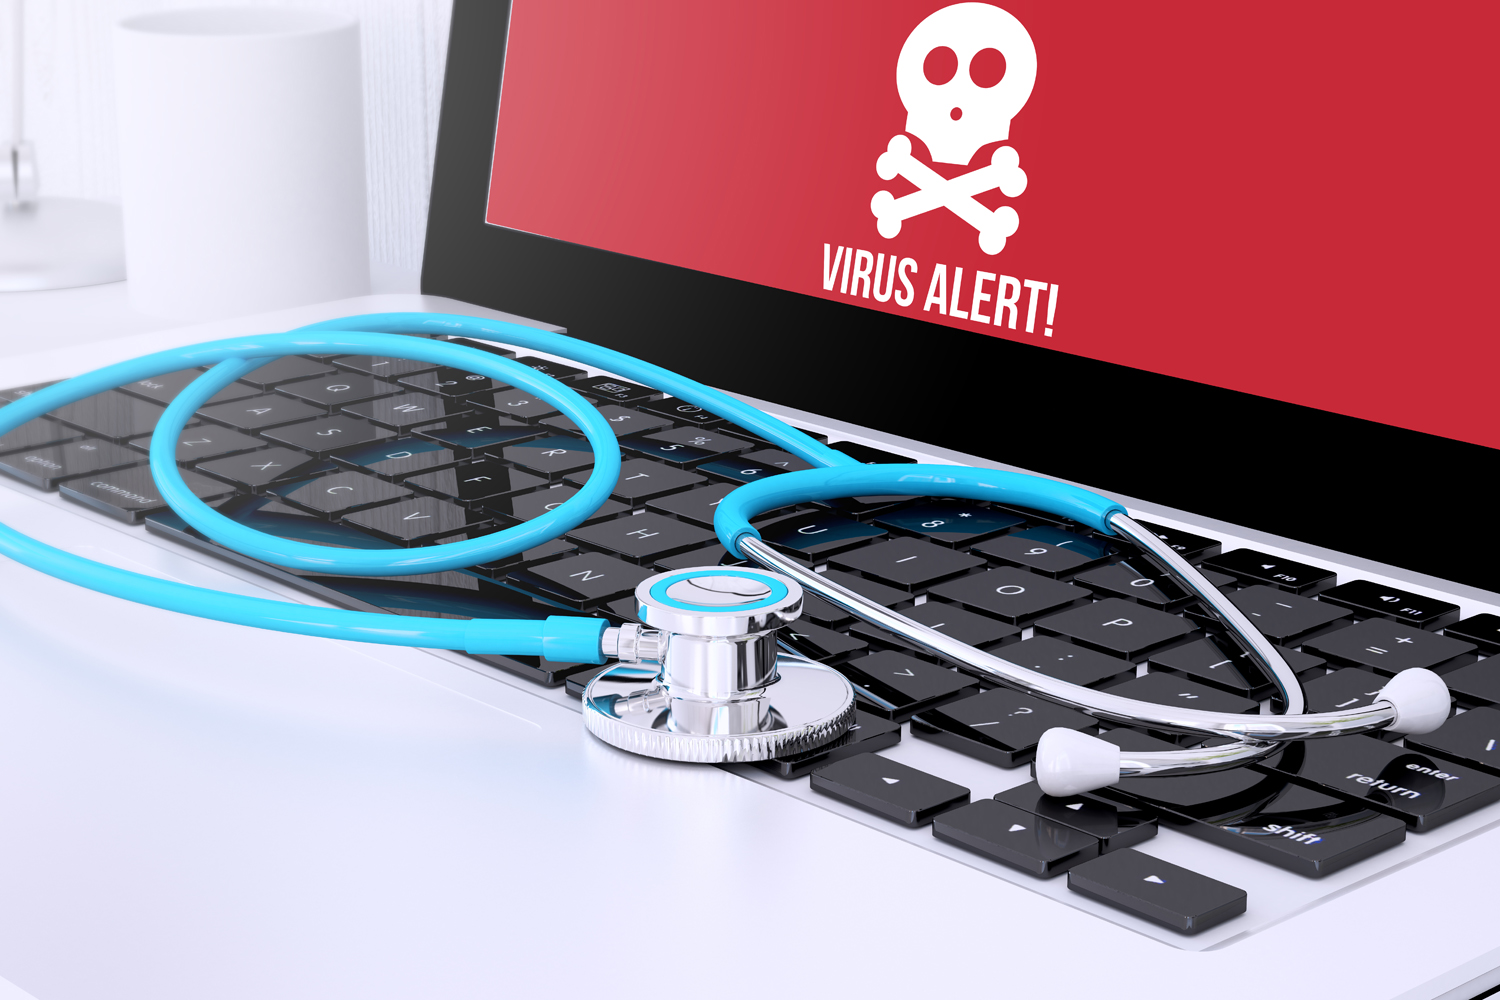 ataque de ransomware contra el ordenador de un hospital